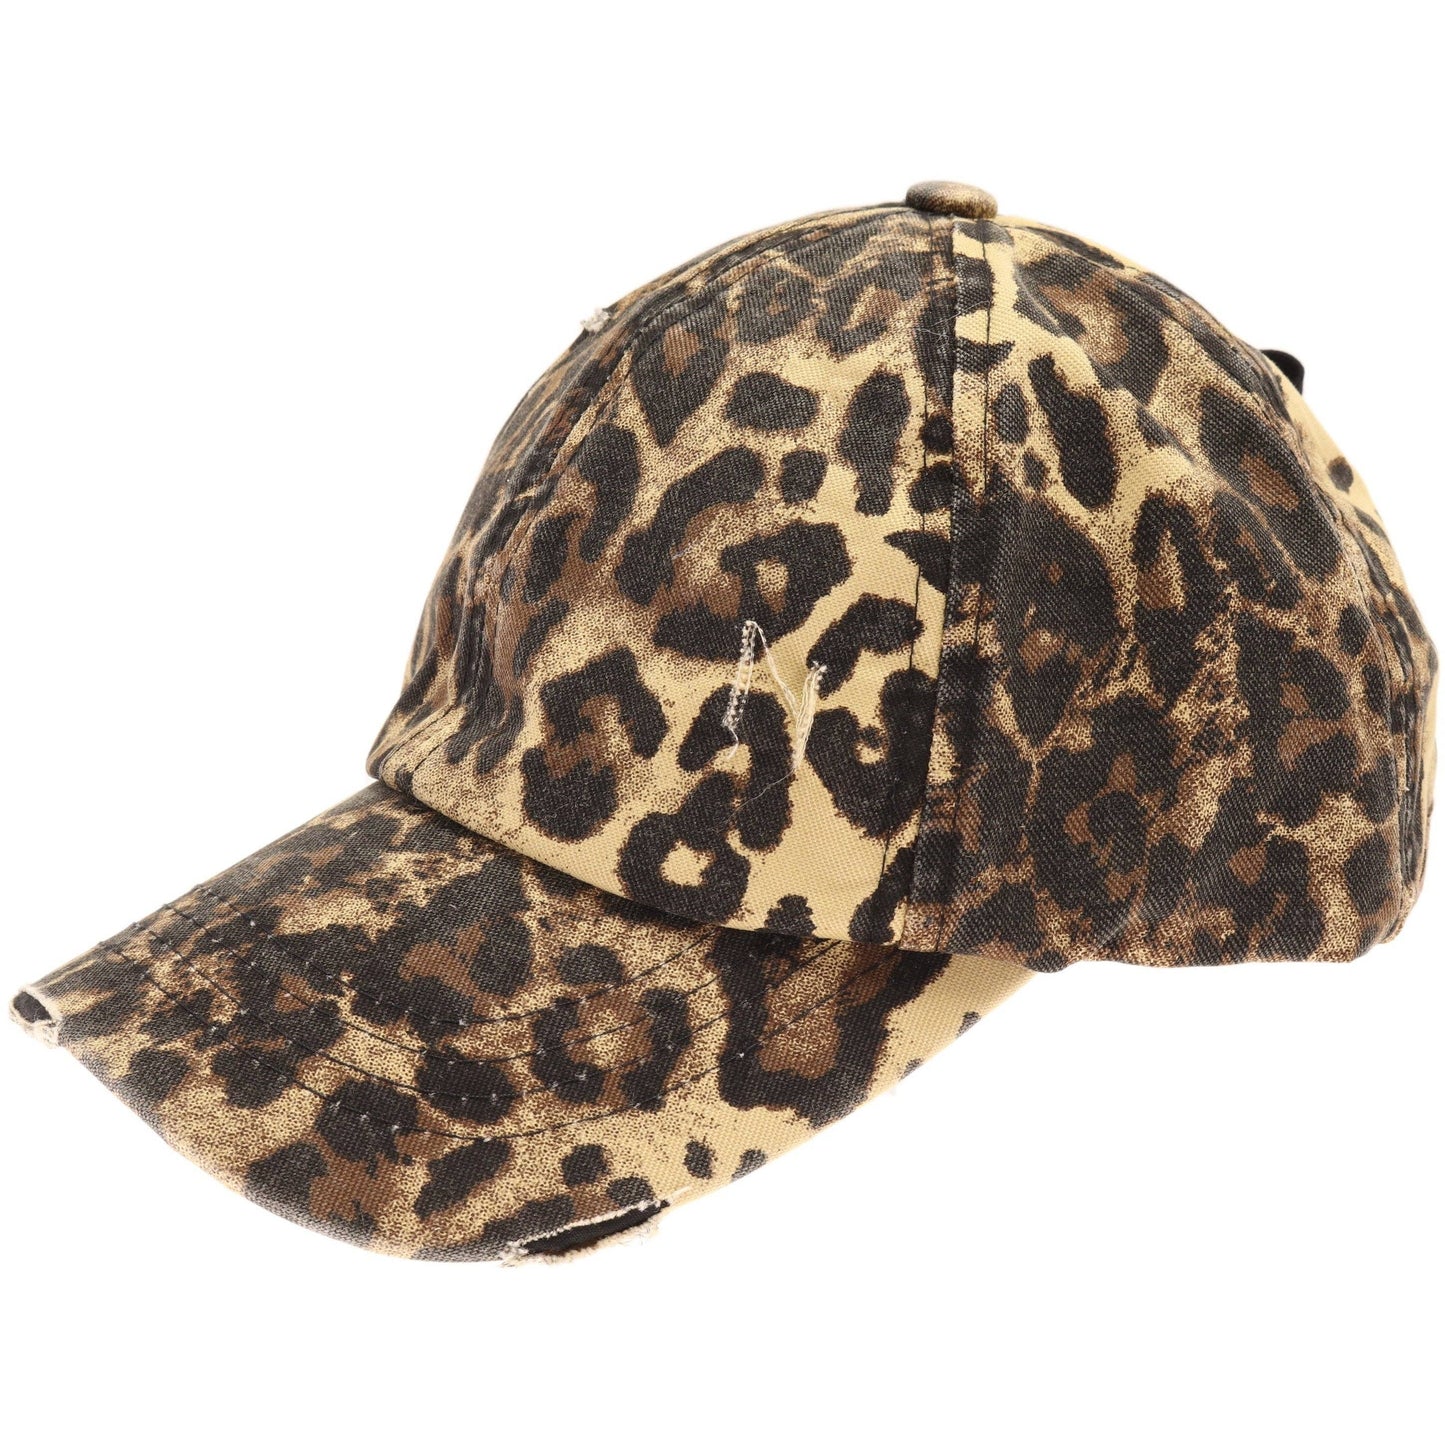 All Leopard Washed Denim Criss-Cross High Ponytail CC Ball Cap